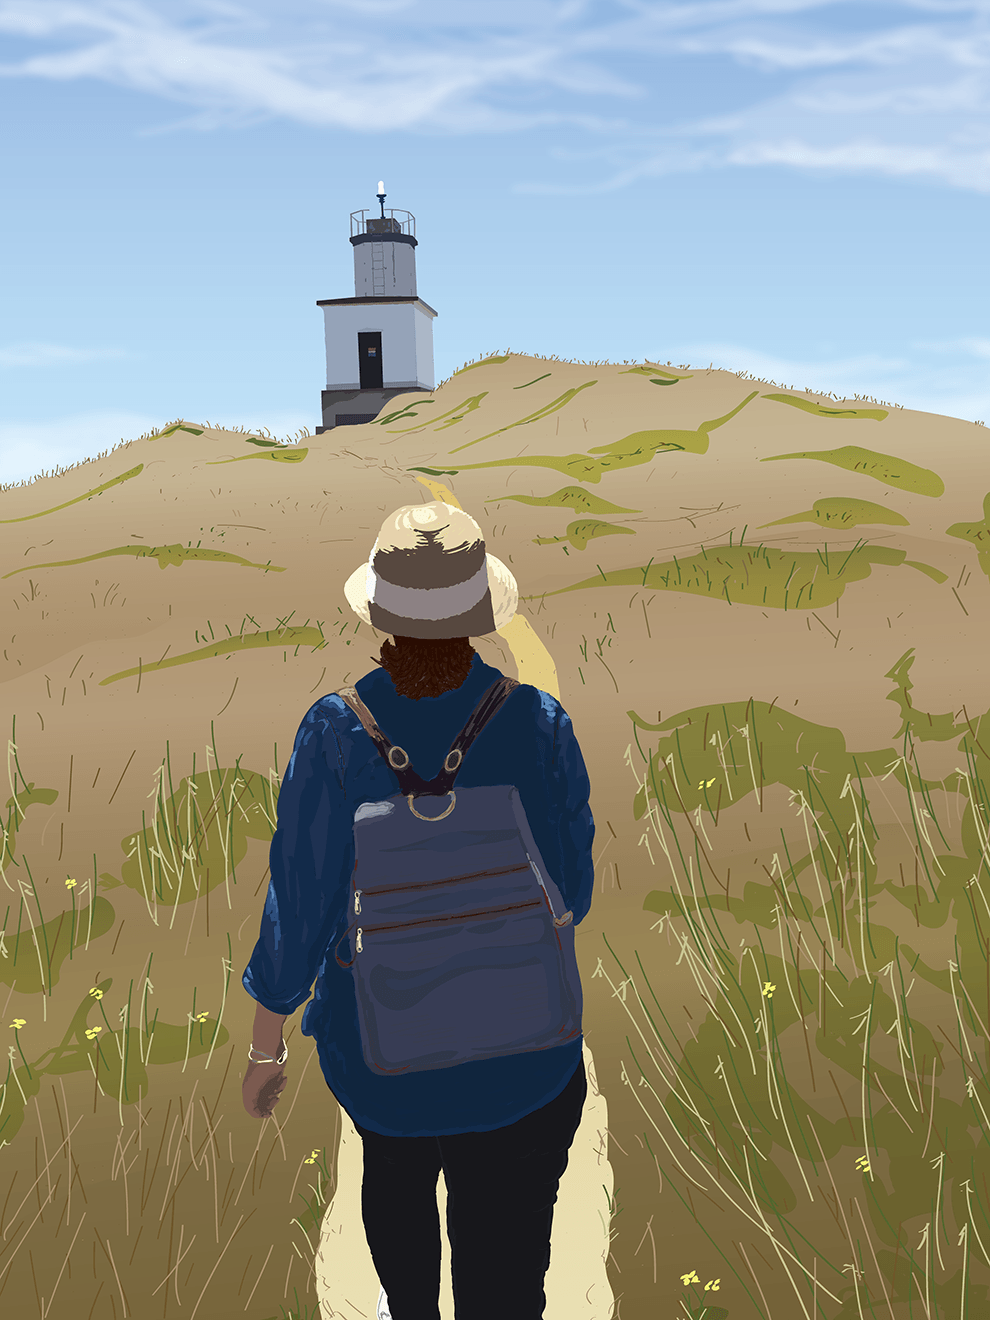 The Lighthouse Path